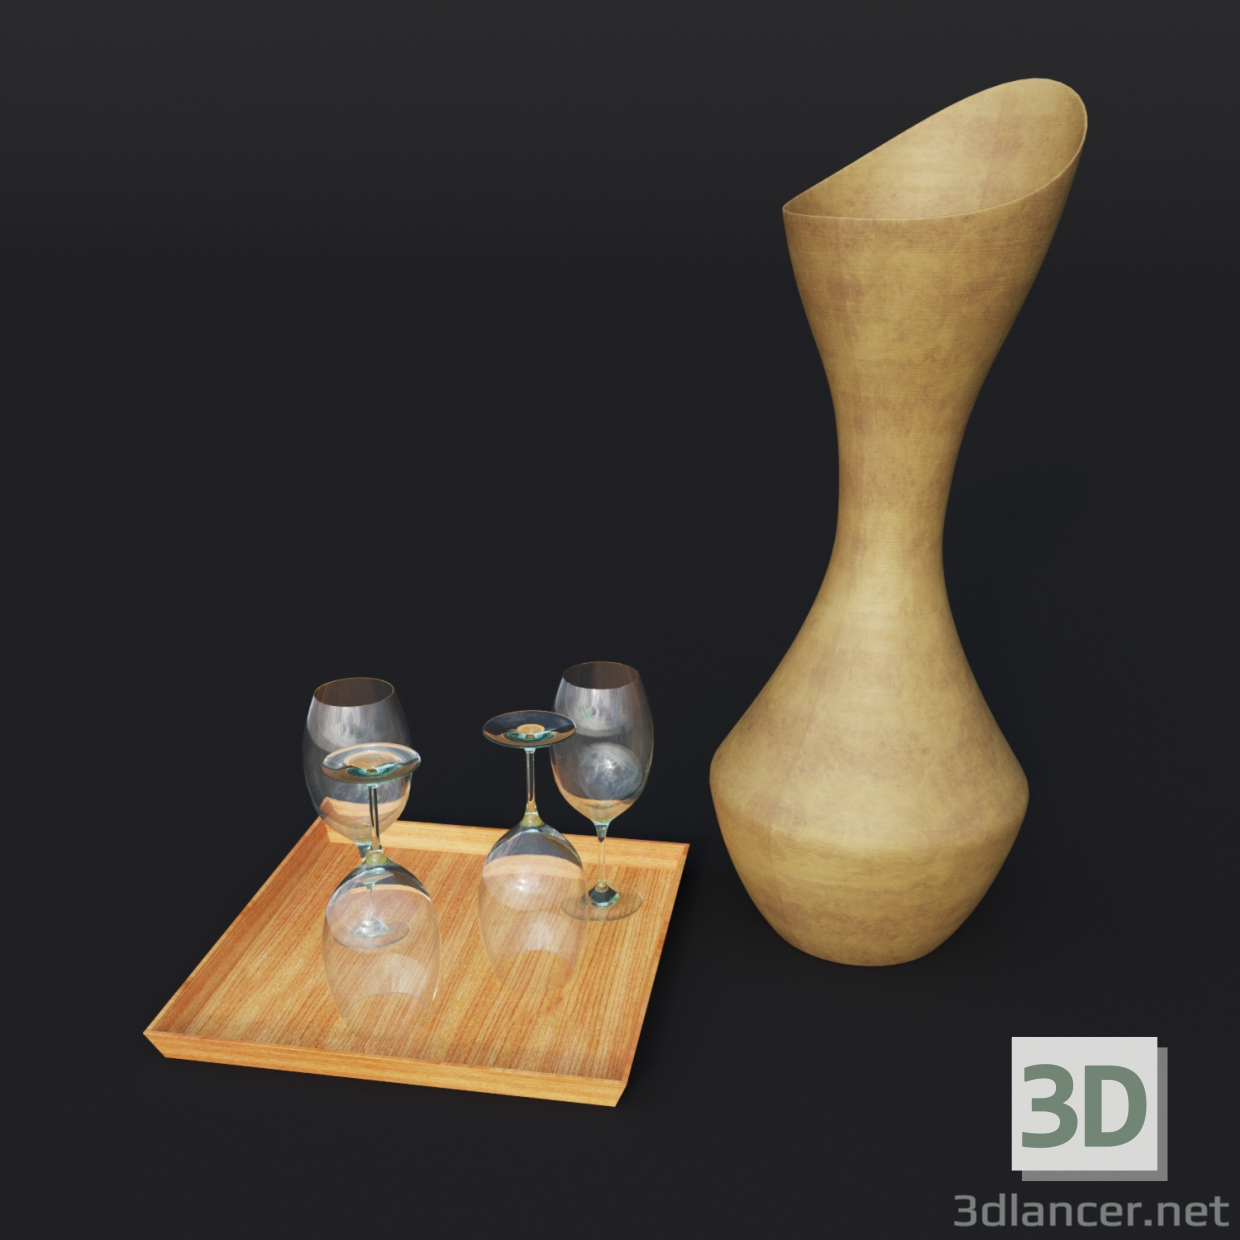 3d model cucharón de madera y 4 vasos - vista previa